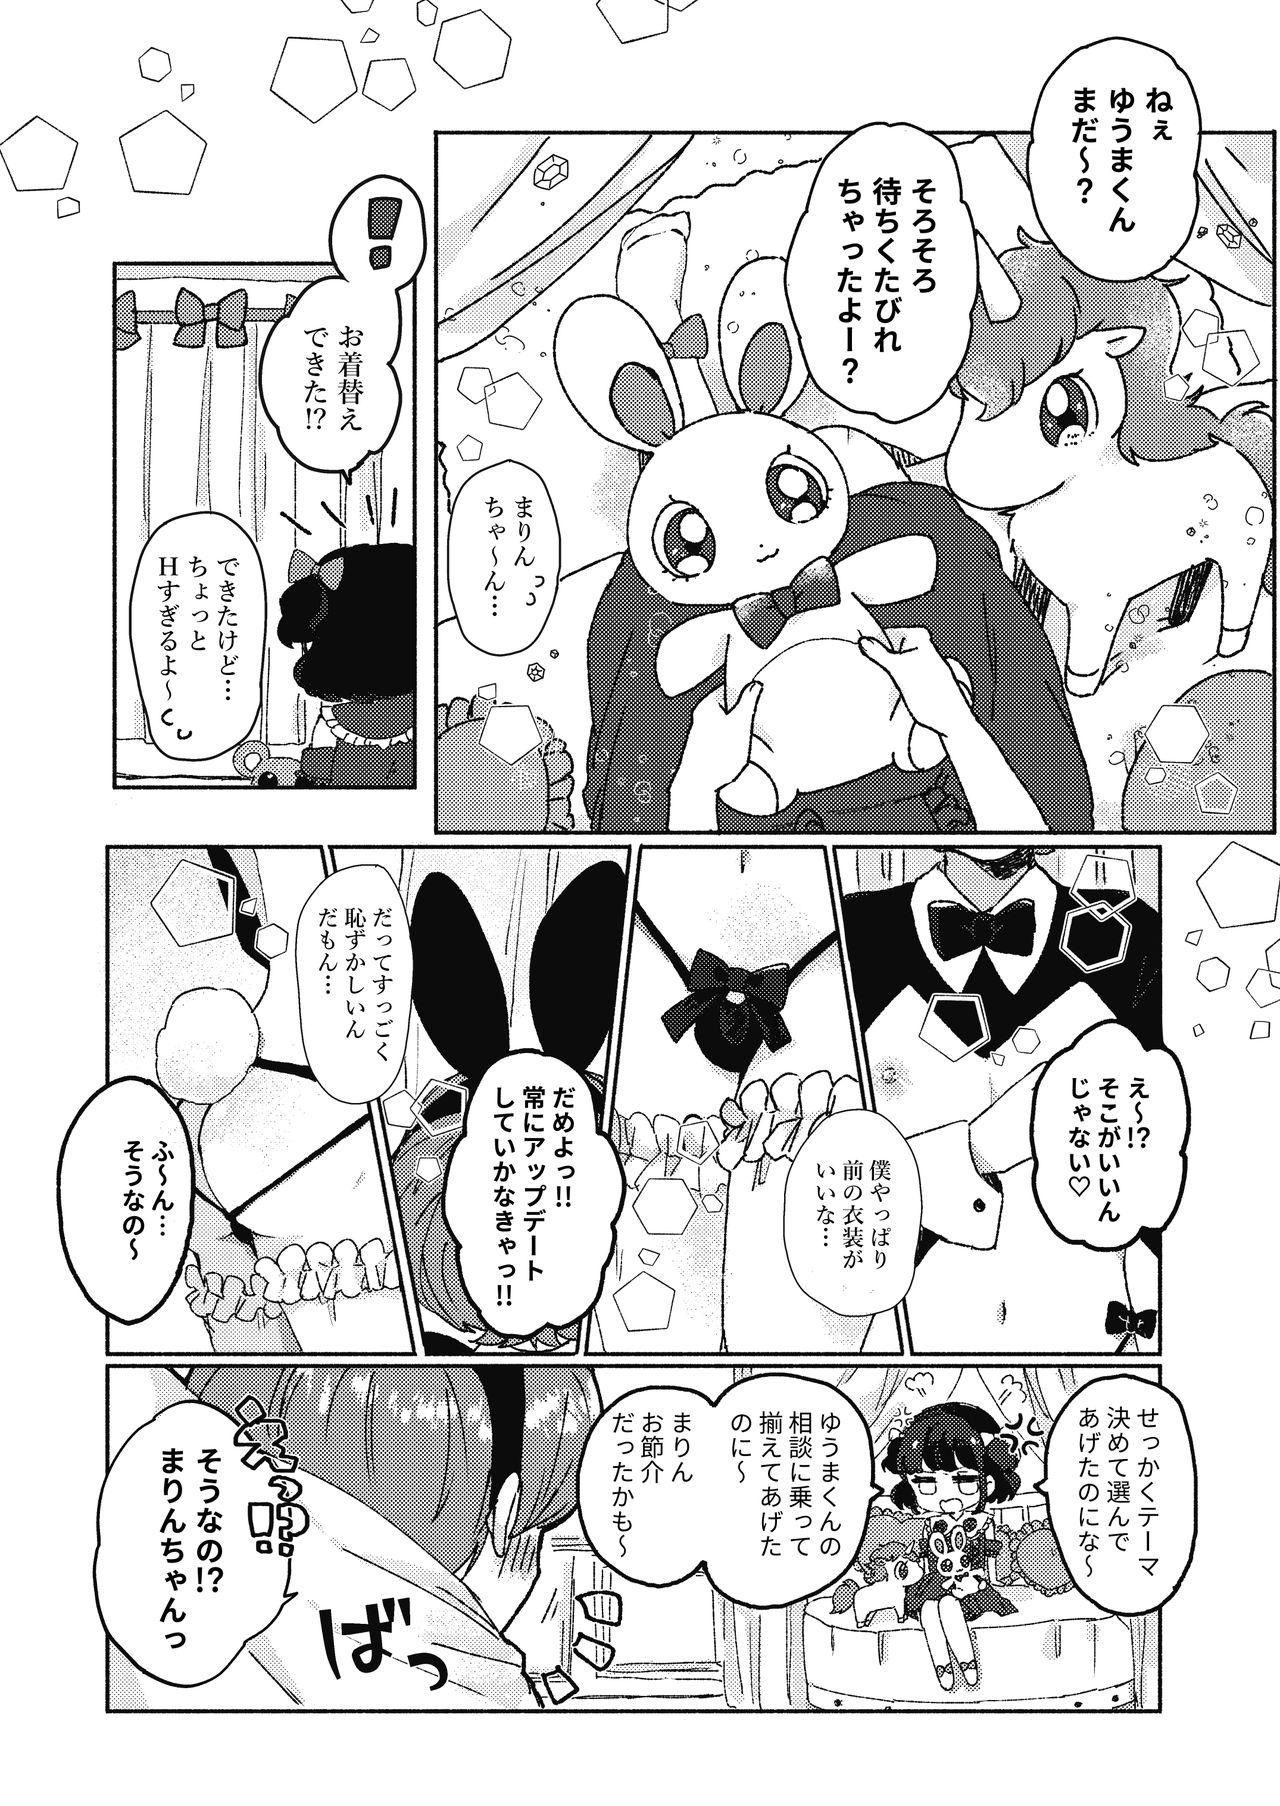 Oiled Sakasama Usagi o Hitorijime - Upside down rabbit all to yourself - Original Nigeria - Page 6